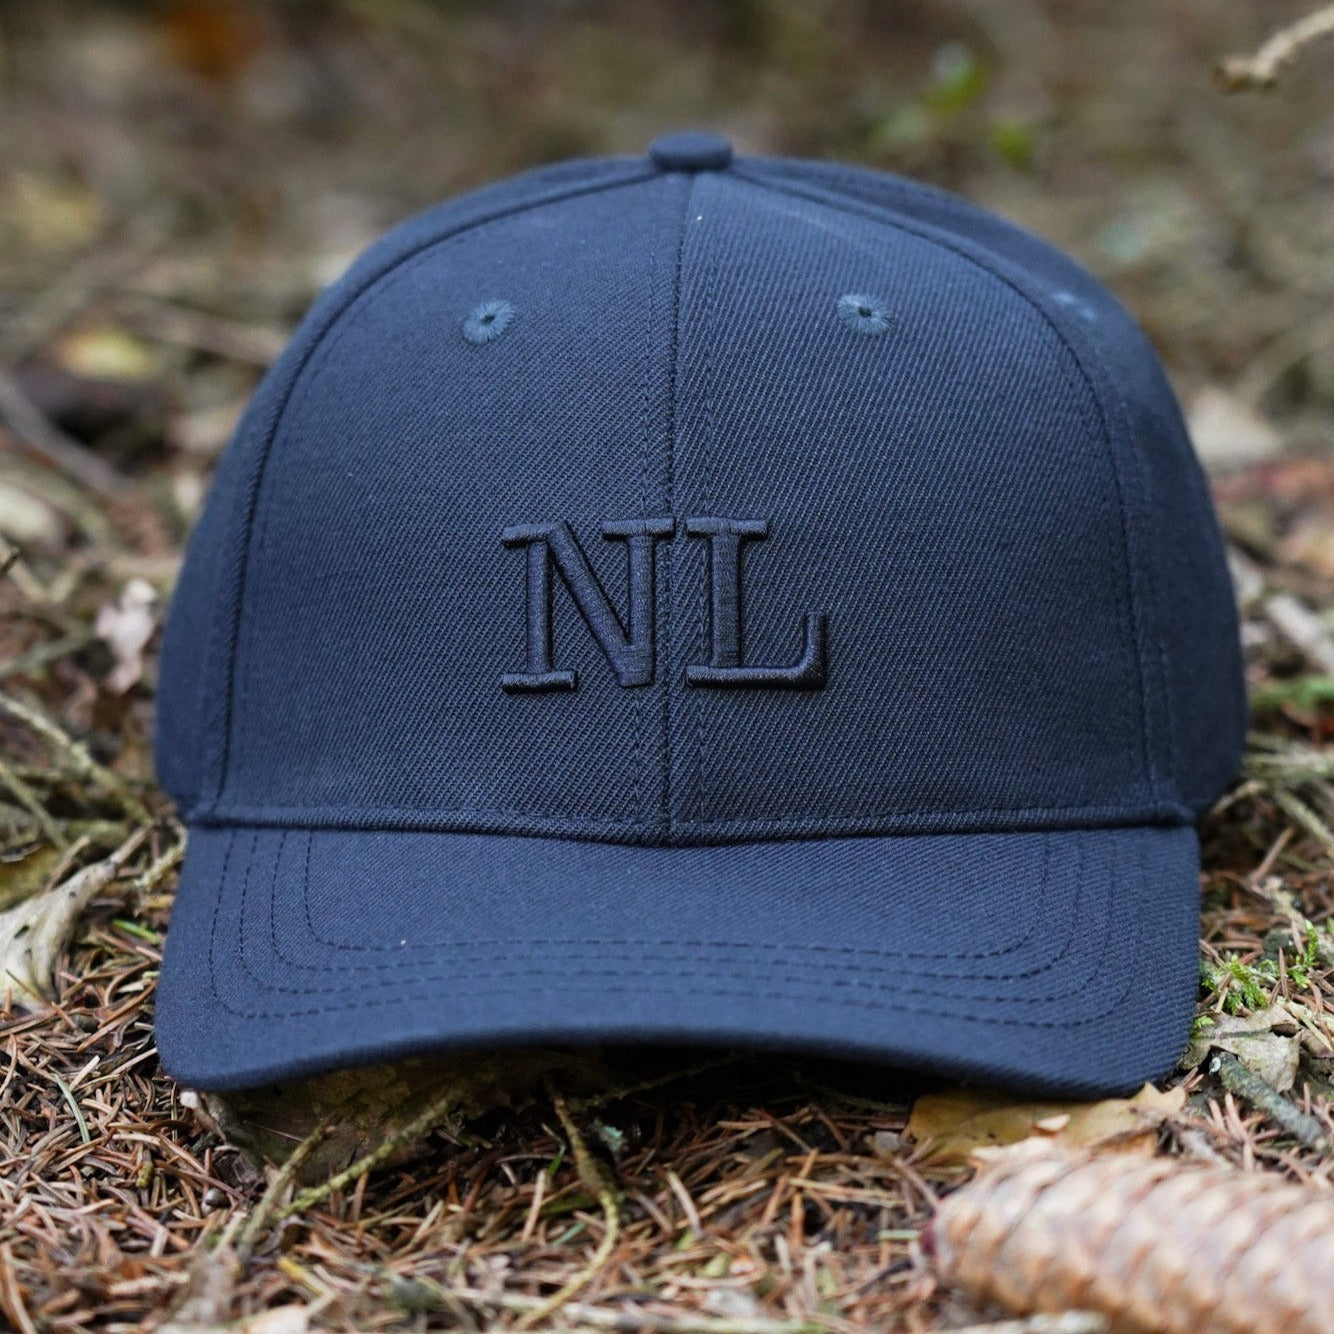 NL Dad cap - Marinblå